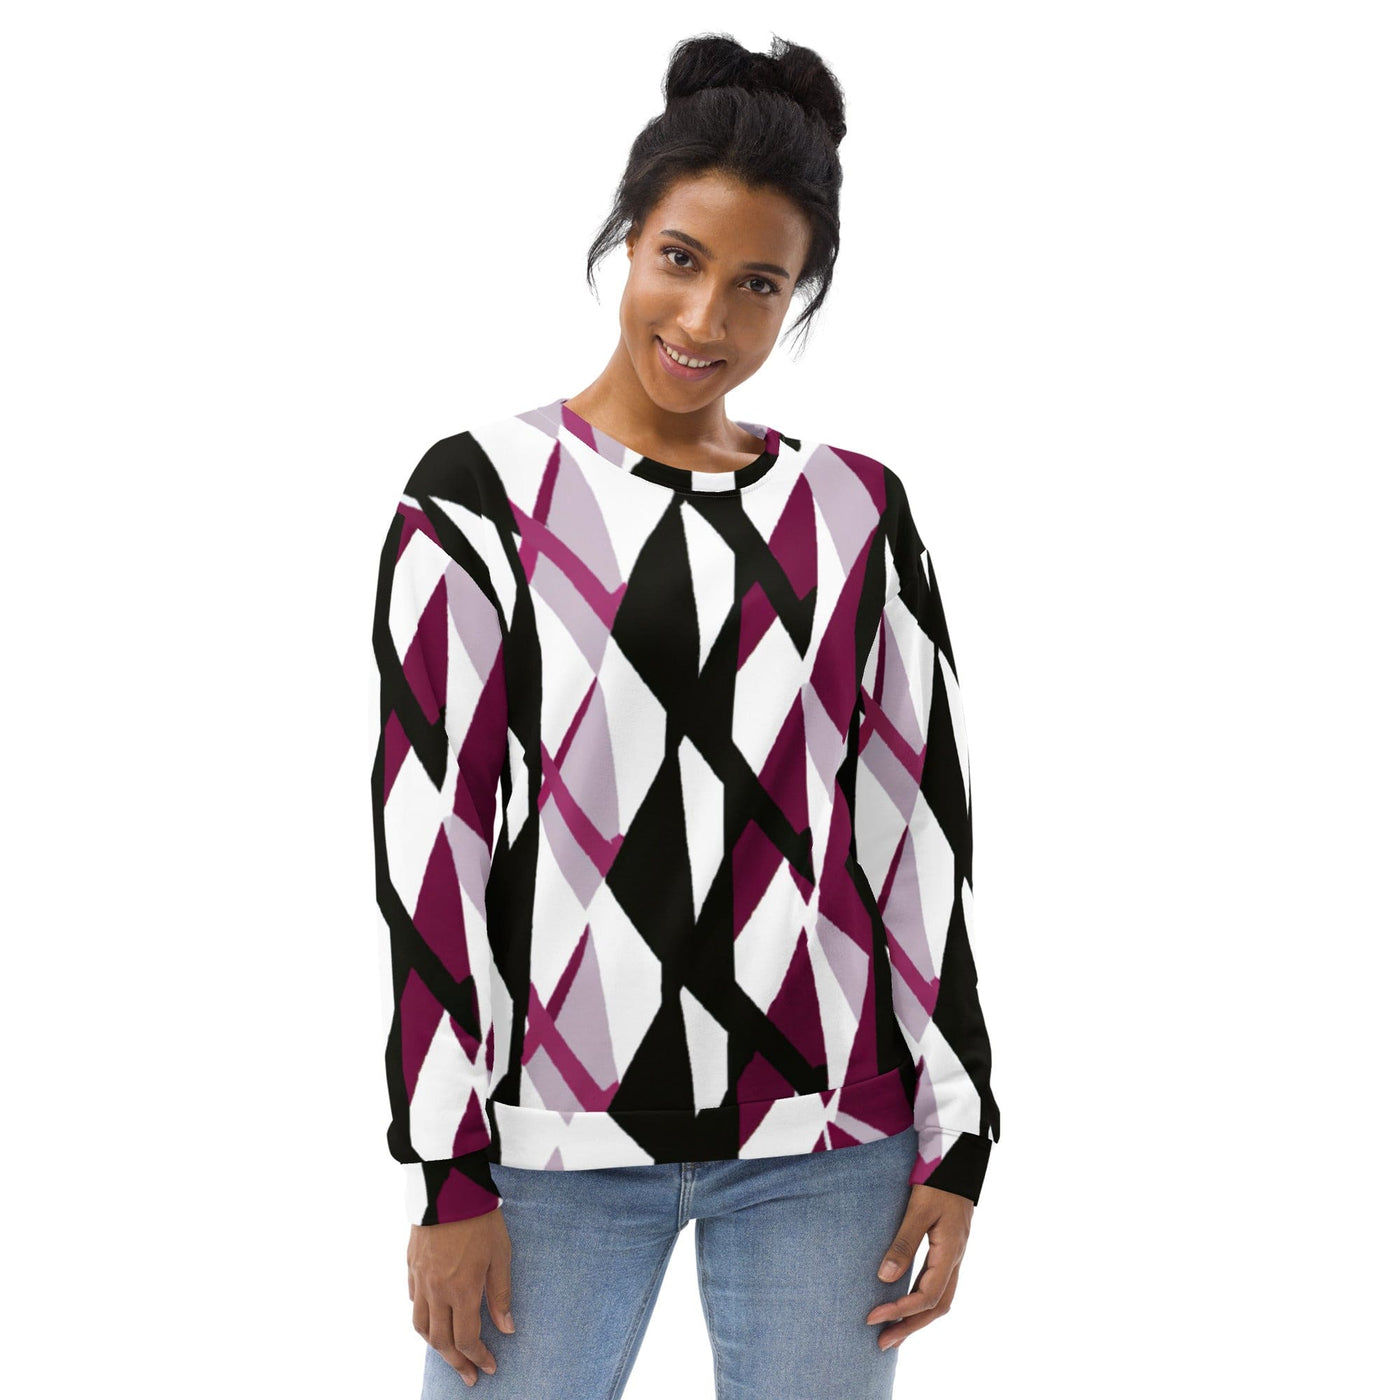 Graphic Sweatshirt For Women Pink Mauve Pattern